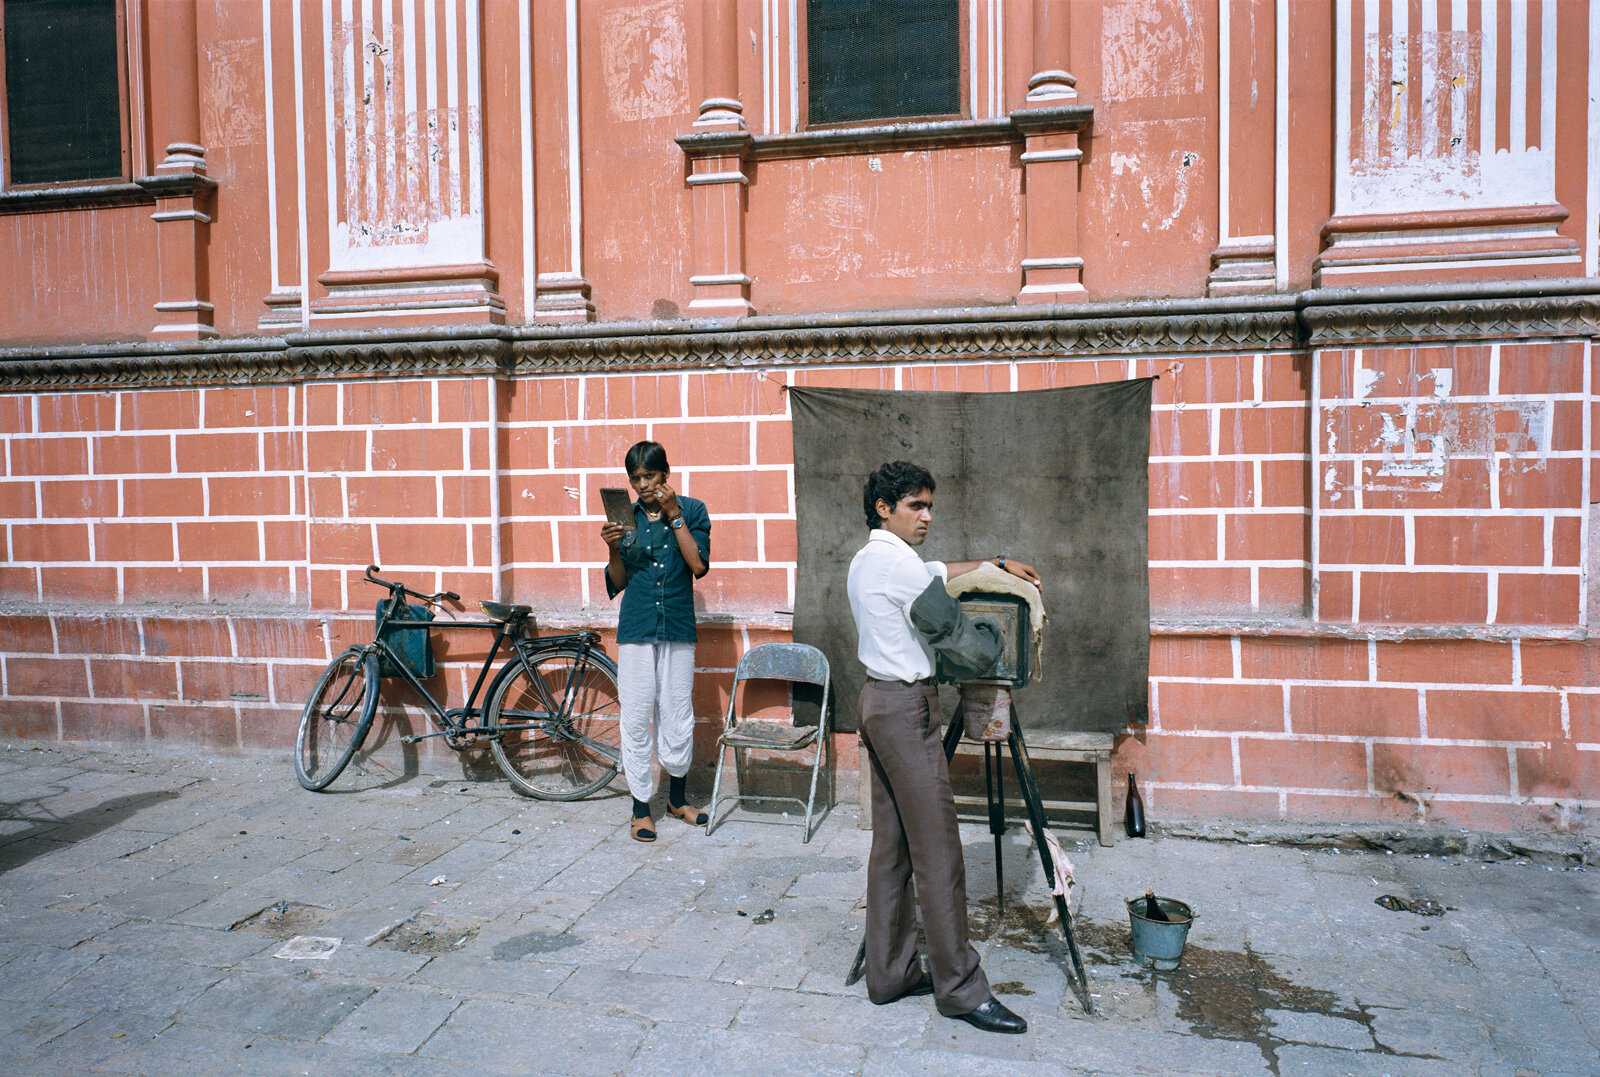  Portrait Studio, Jaipur, Rajasthan 1985  